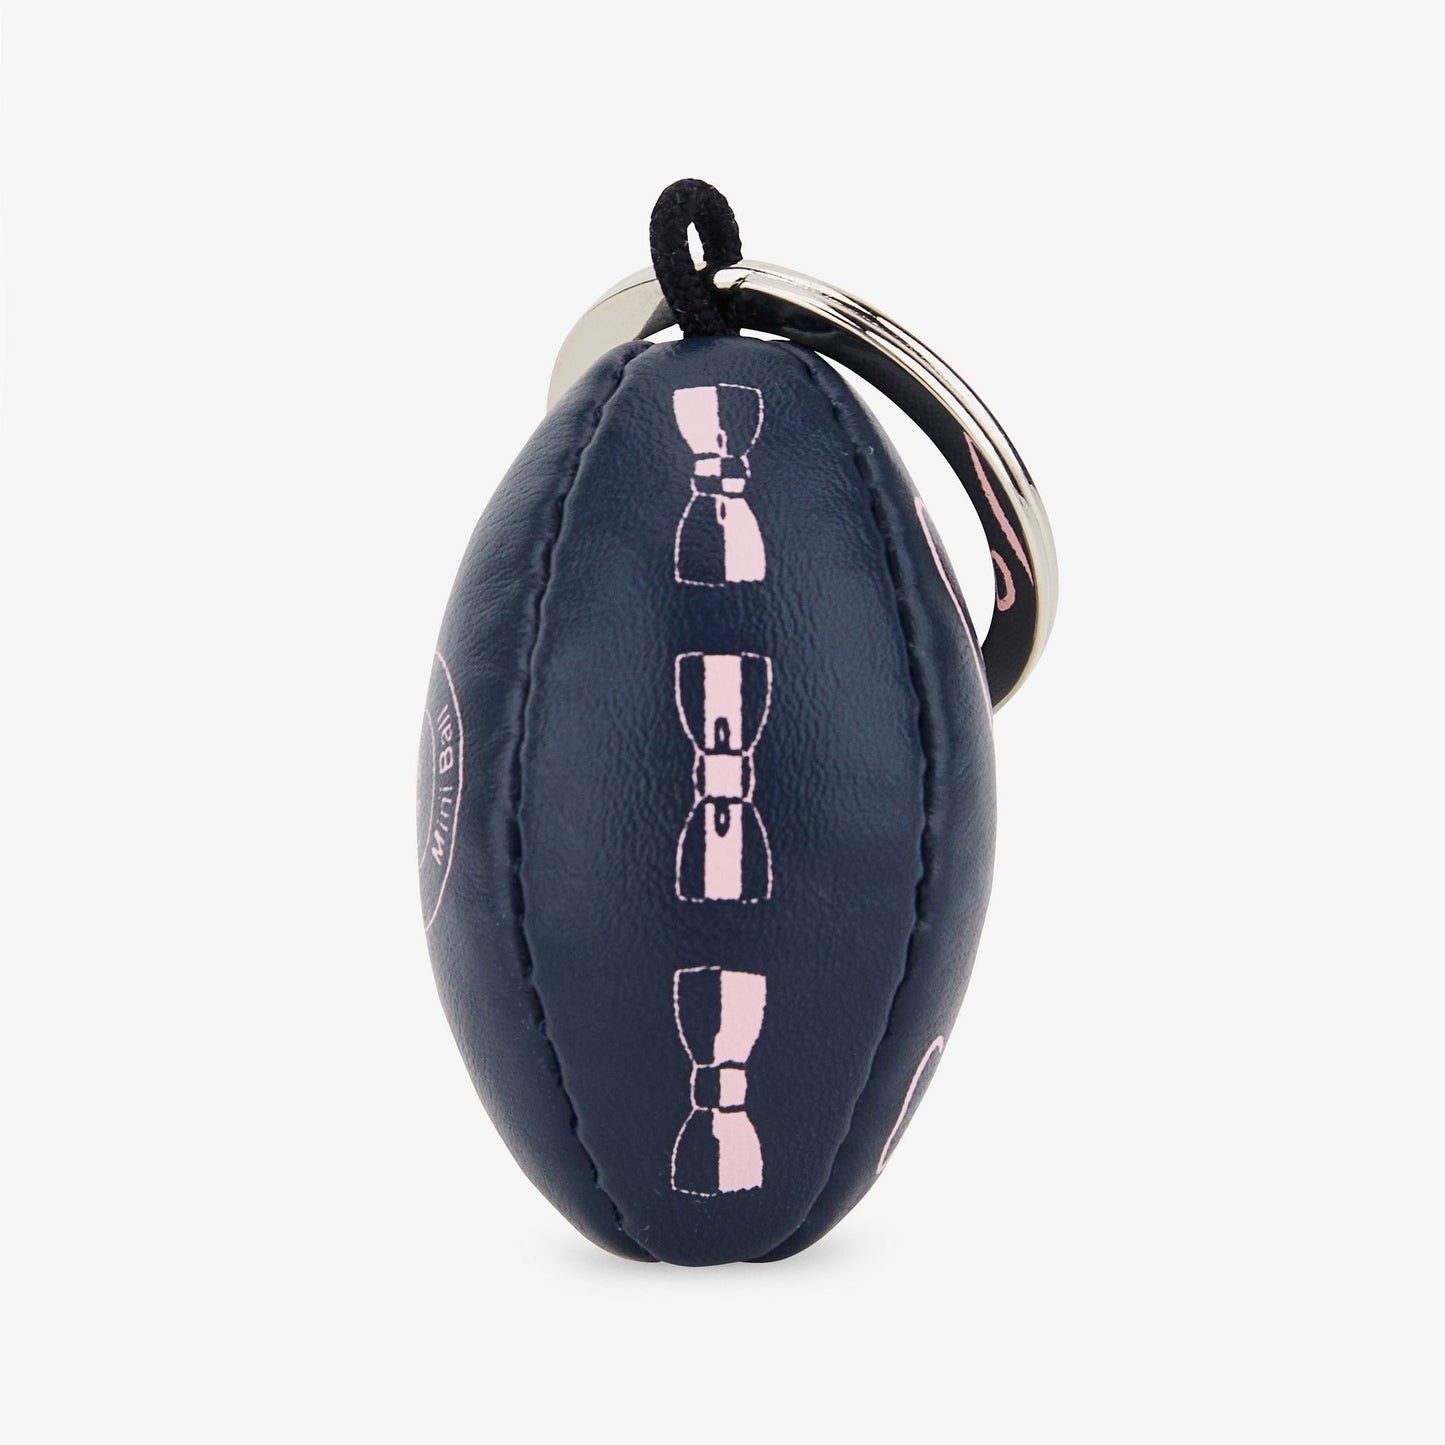 Porte-clés ballon de rugby bleu marine sérigraphié - Image 2